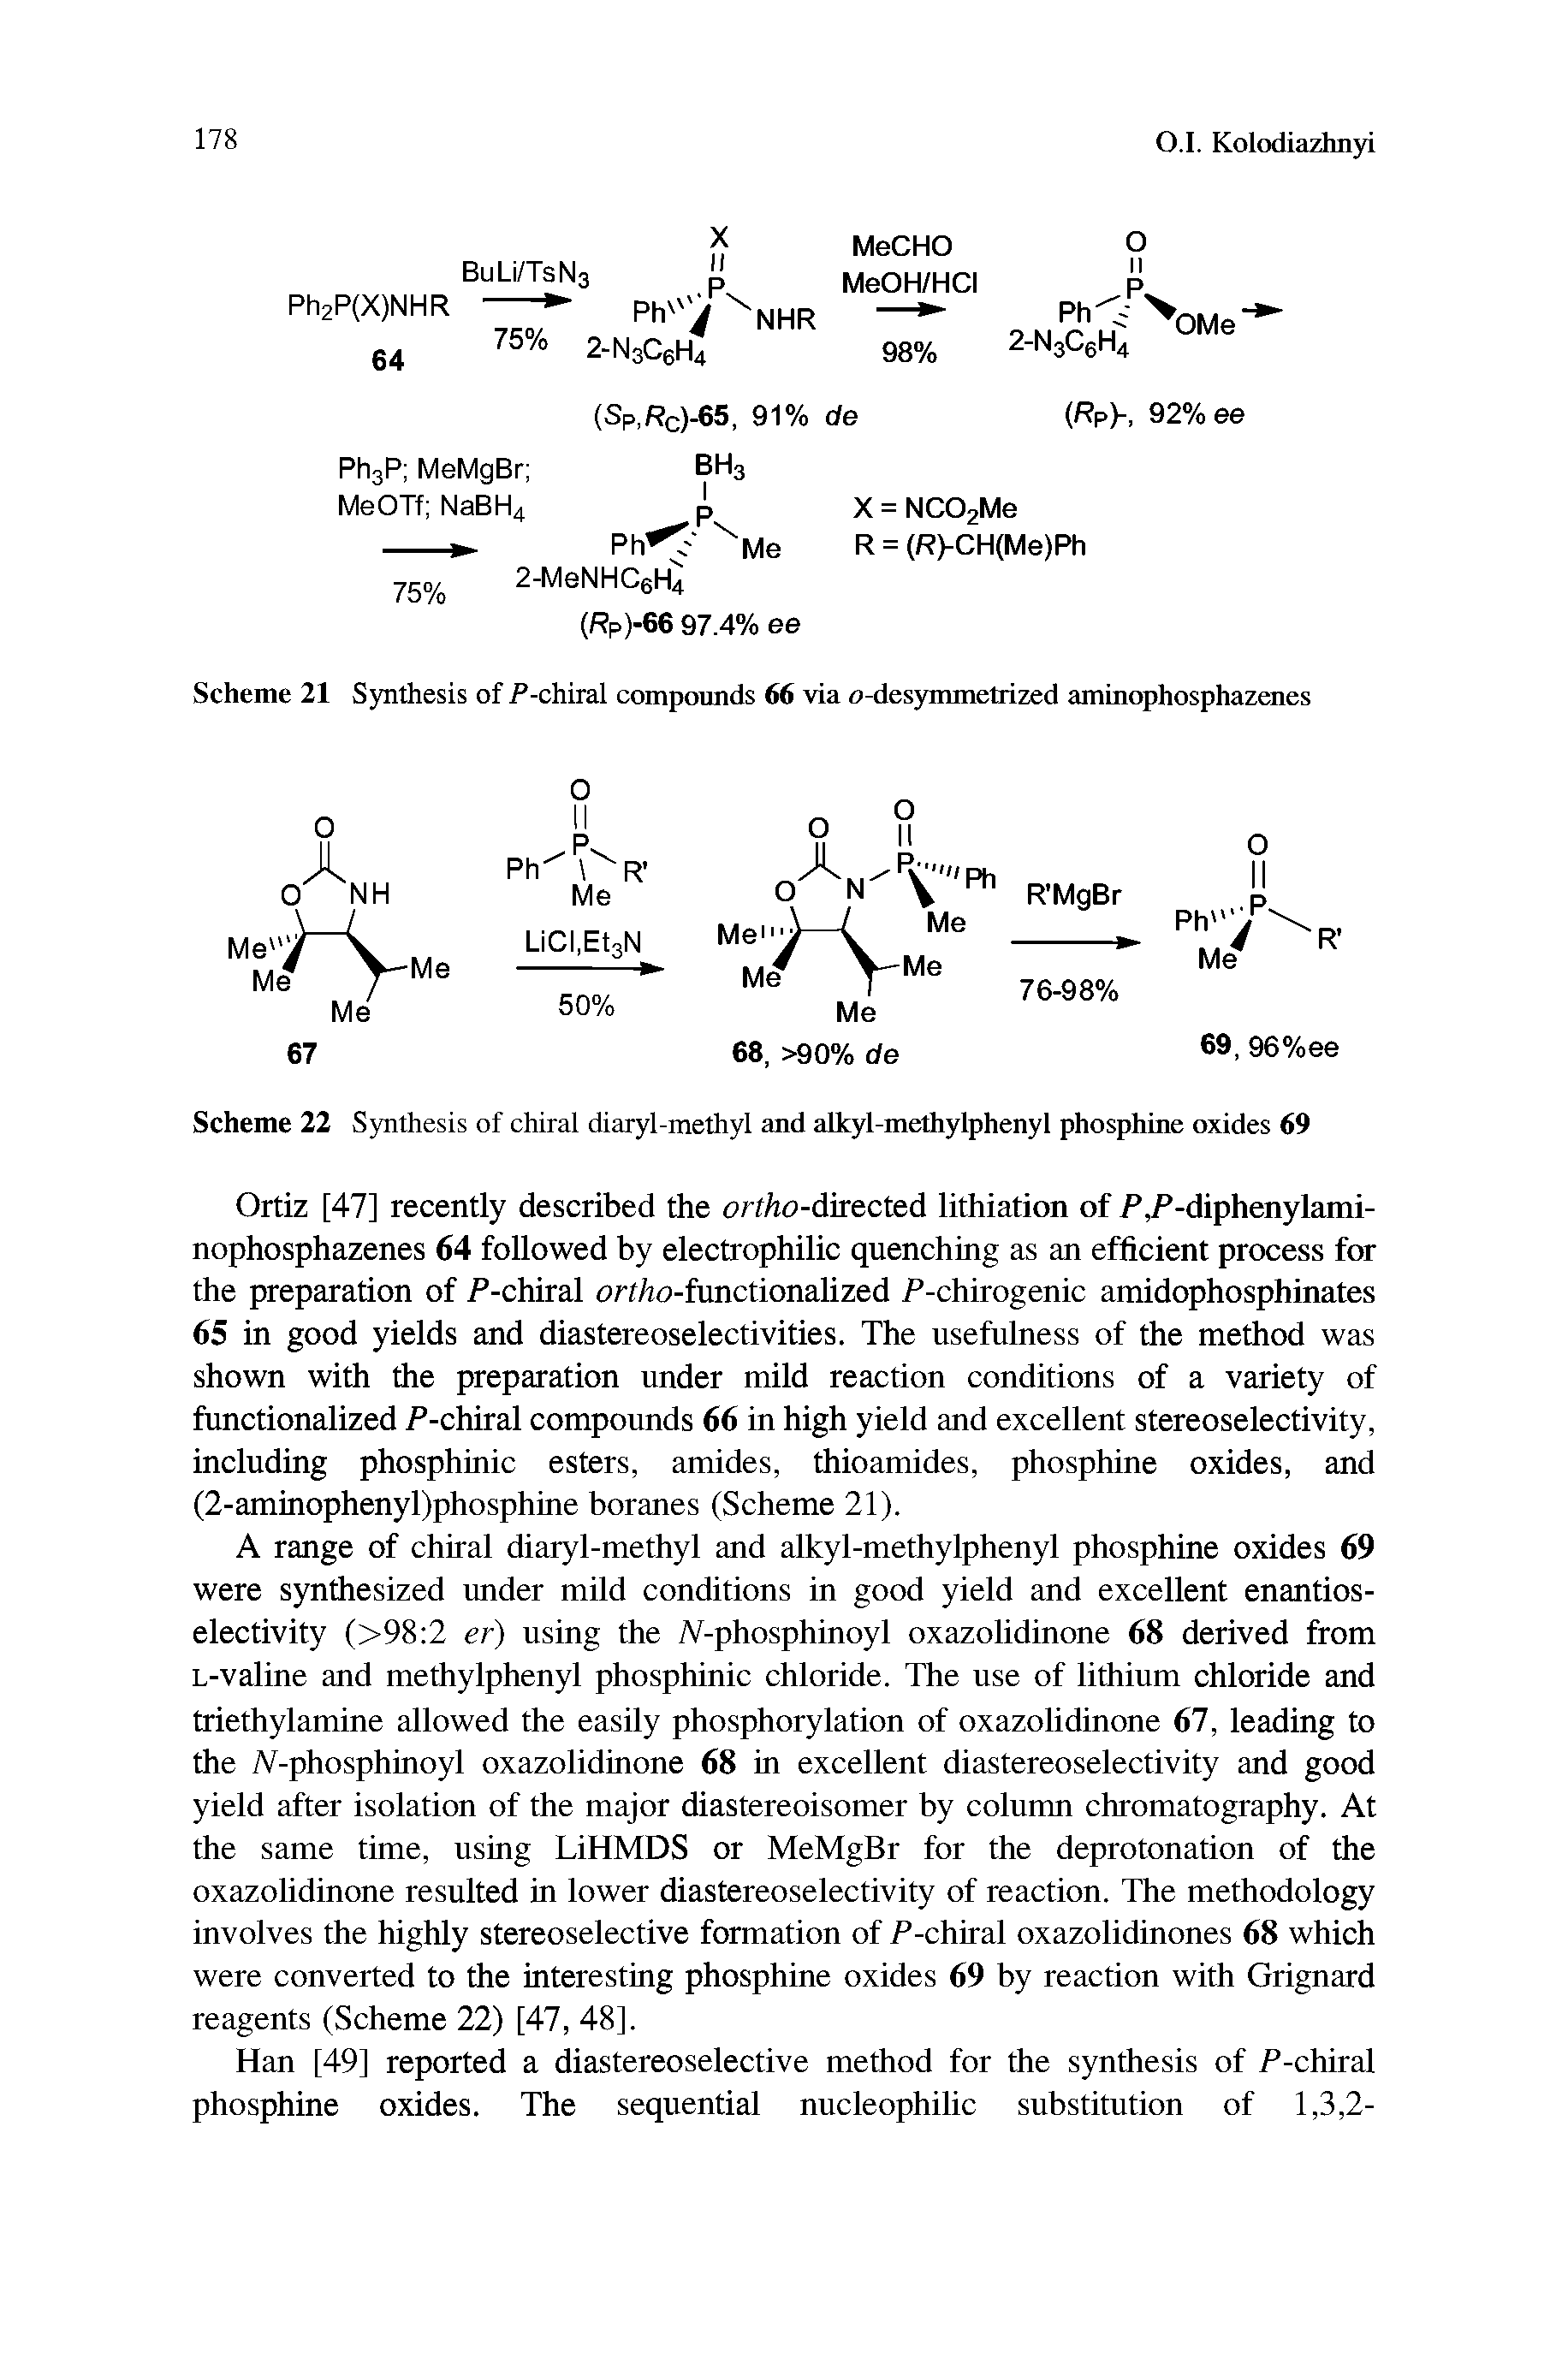 Scheme 21 Synthesis of P-chiral compounds 66 via e-desymmetrized aminophosphazenes...